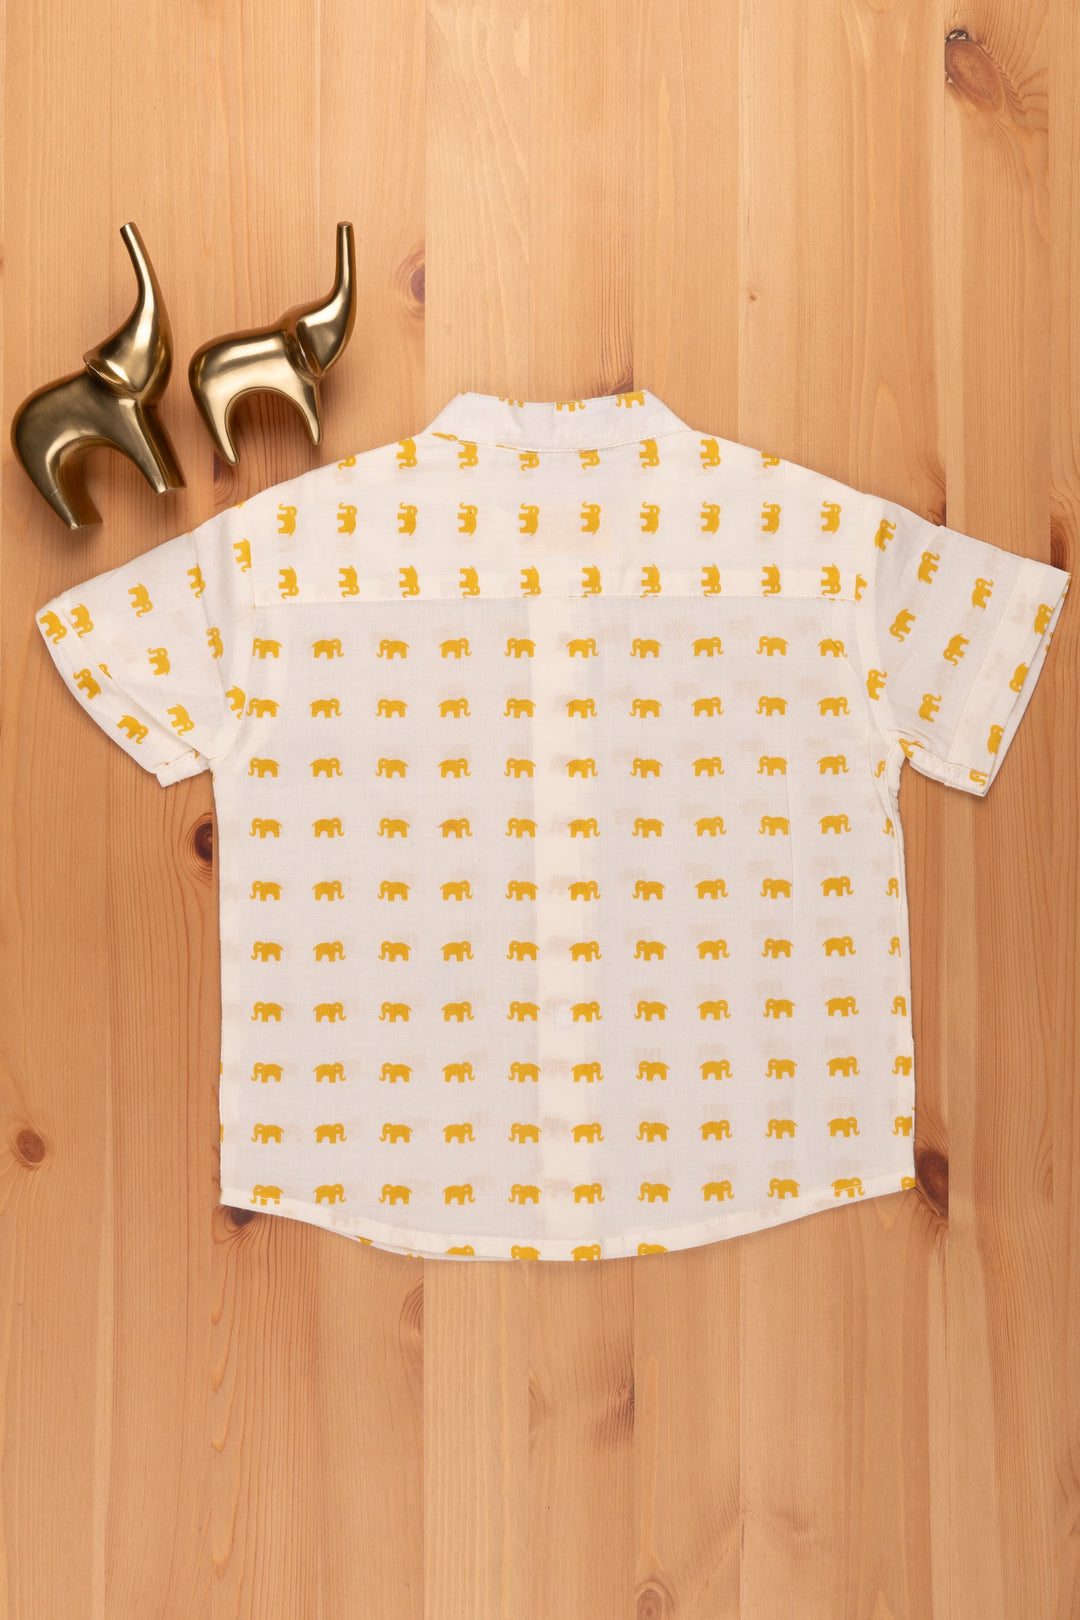 The Nesavu Boys Cotton Shirt Mini Yellow Elephant Printed White Cotton Shirt for Boys By The Nesavu psr silks Nesavu